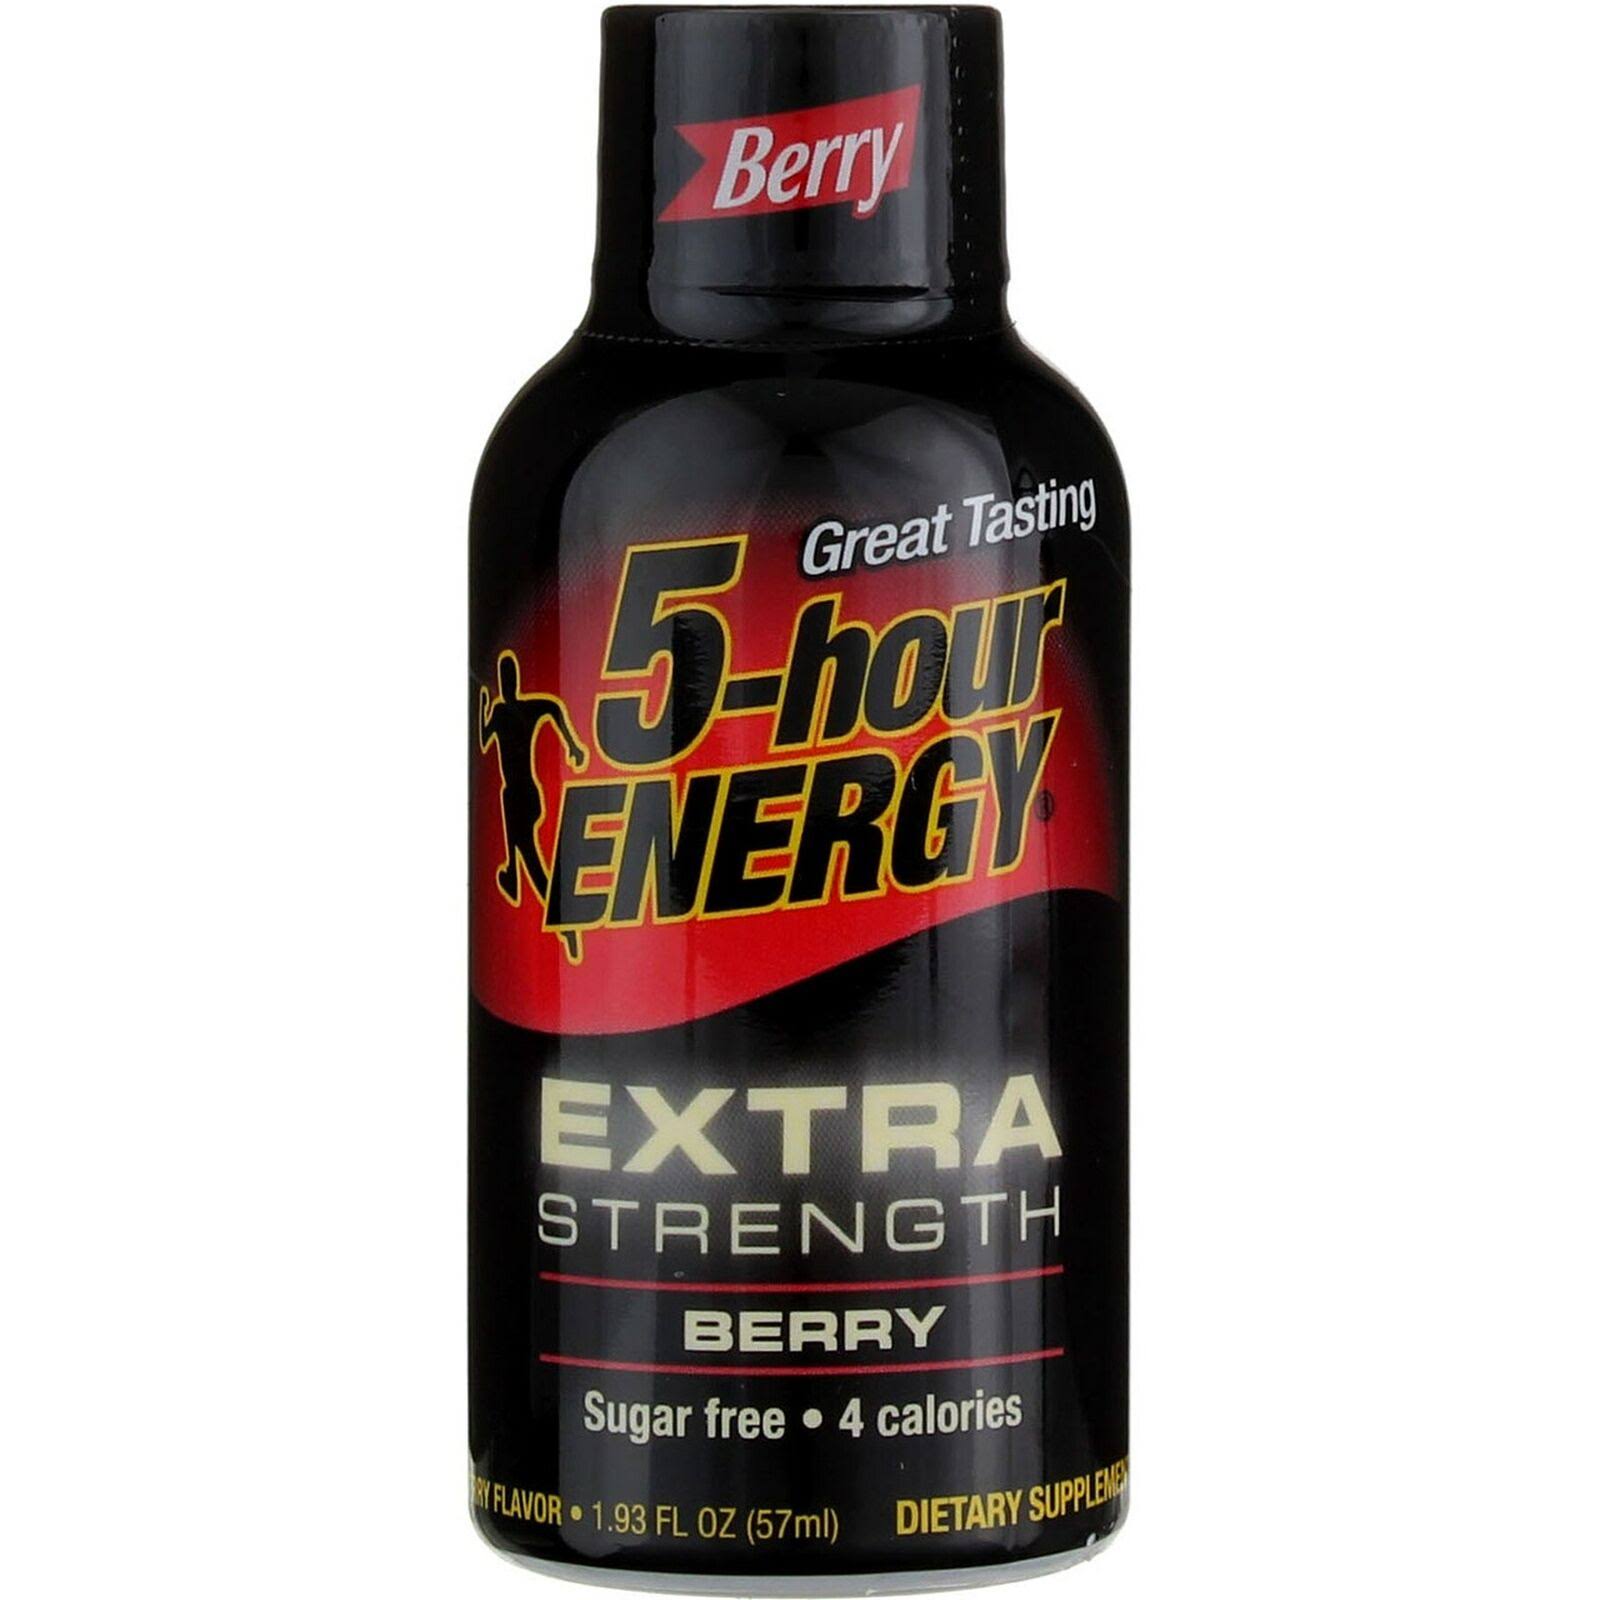 5-Hour Energy Extra Strength Energy Drink - Berry